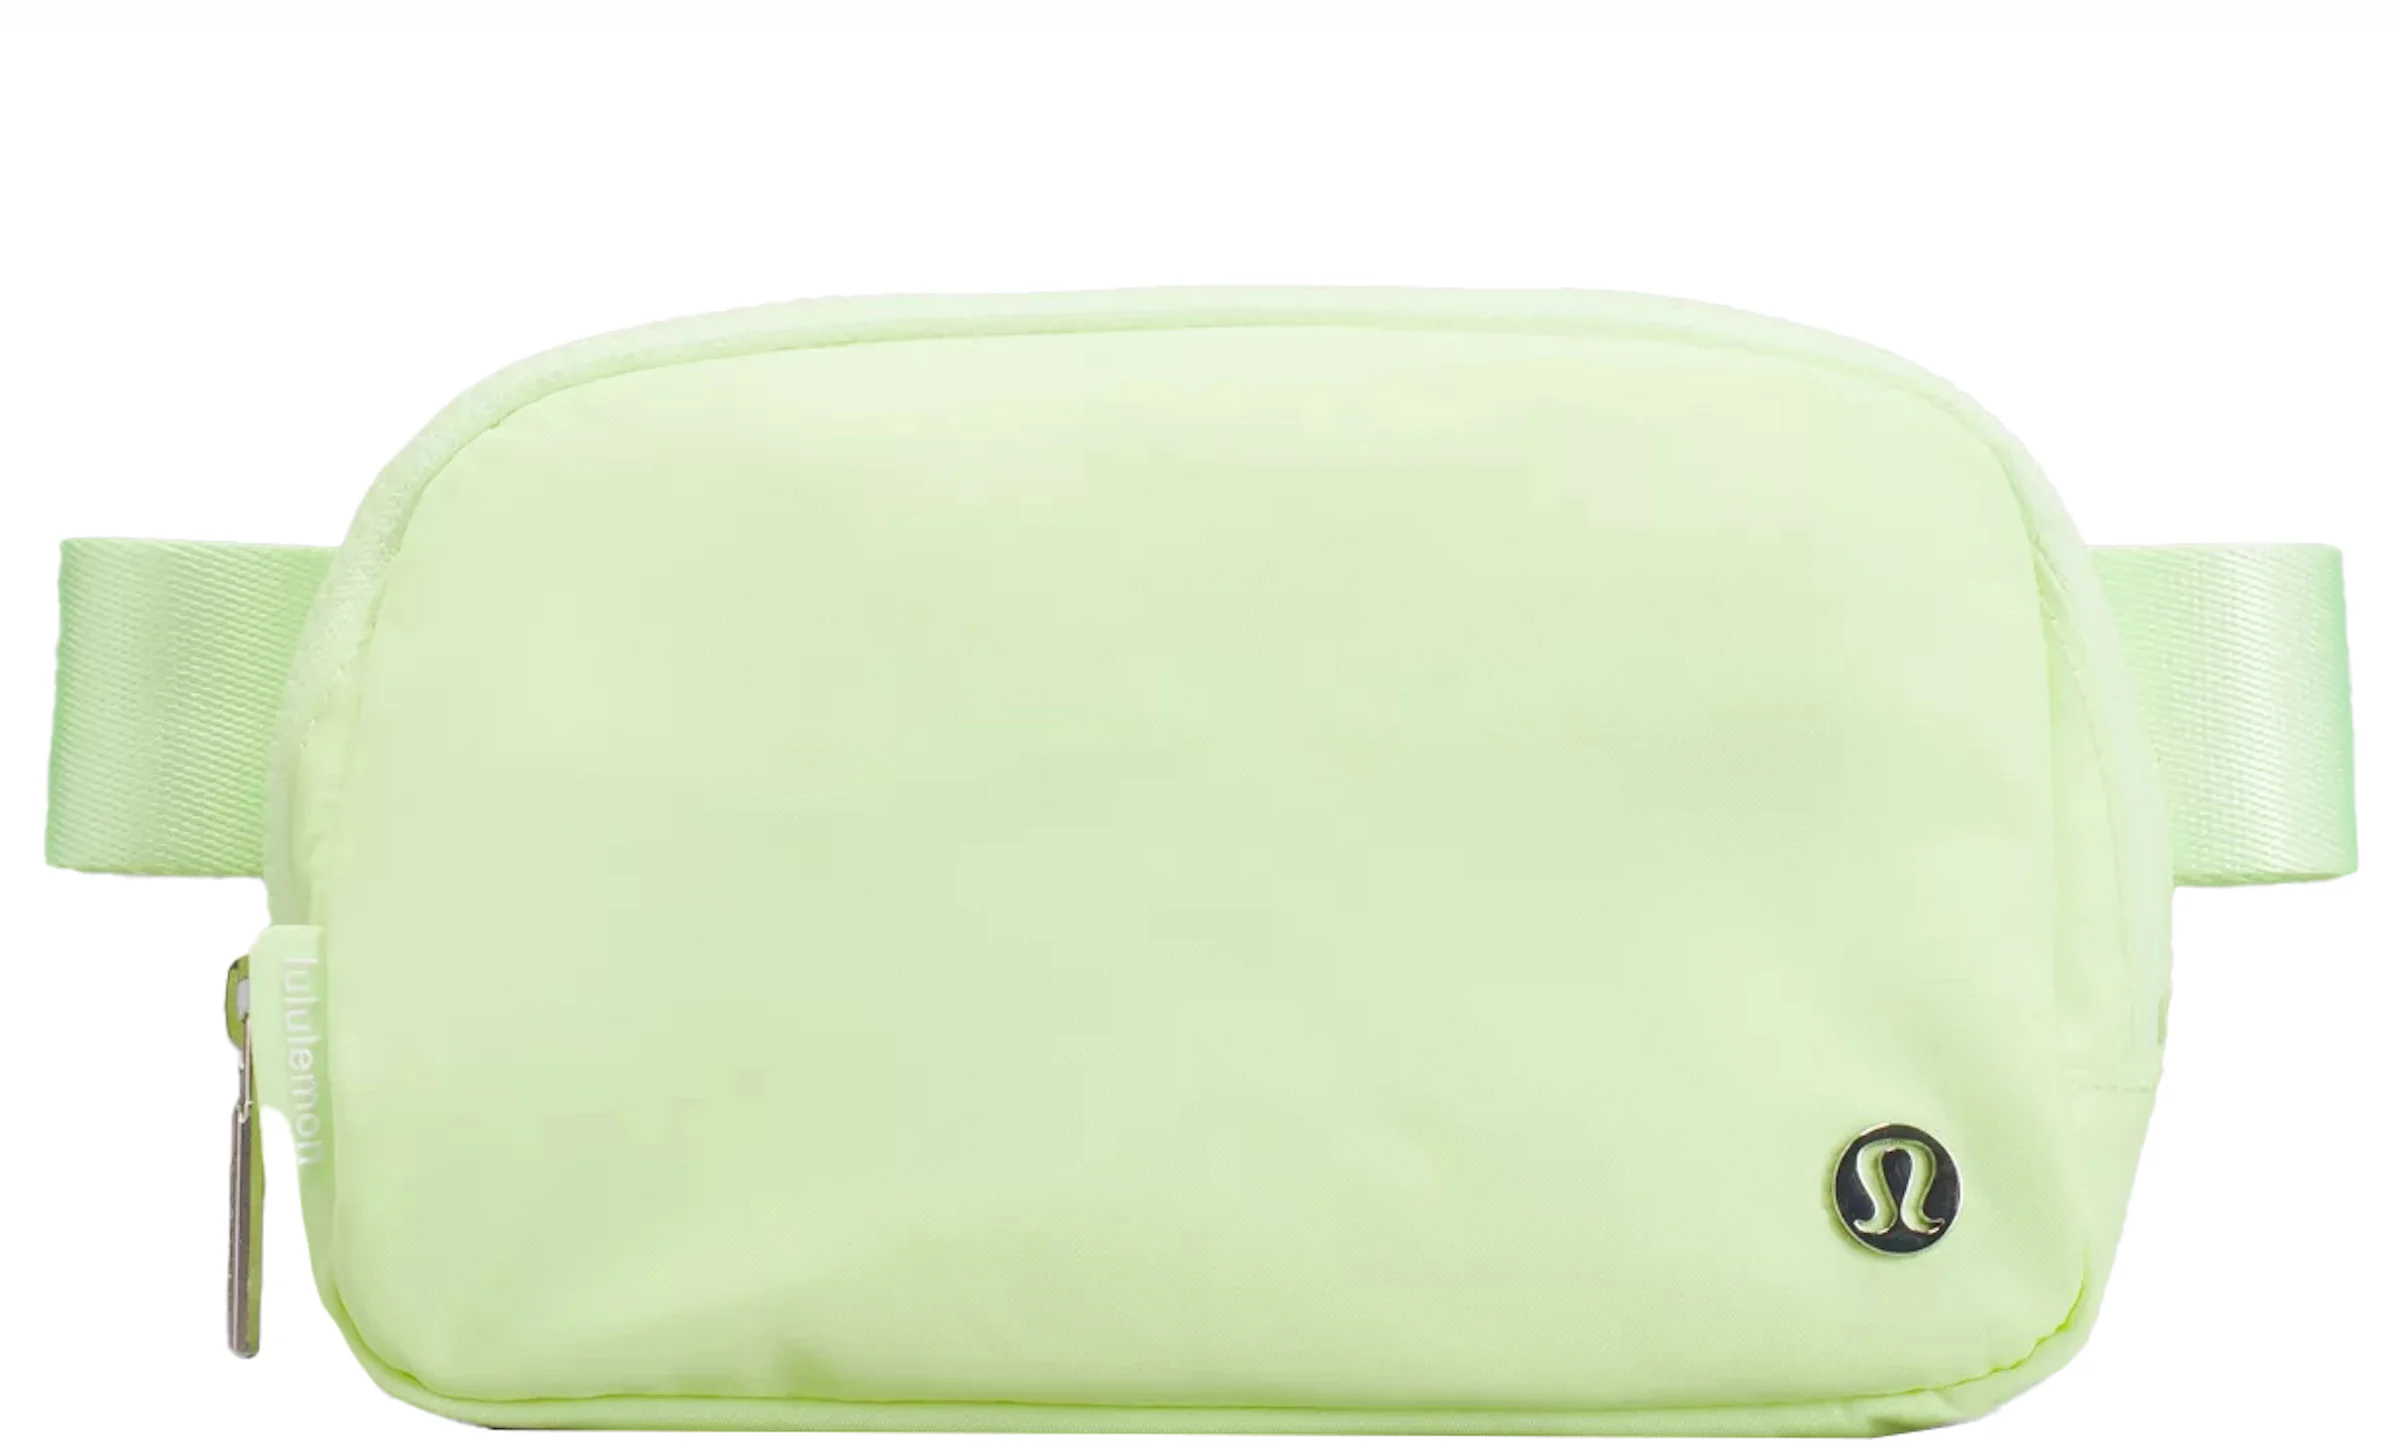 lululemon kohlrabi green / white, faded zap, & mint moment color compa